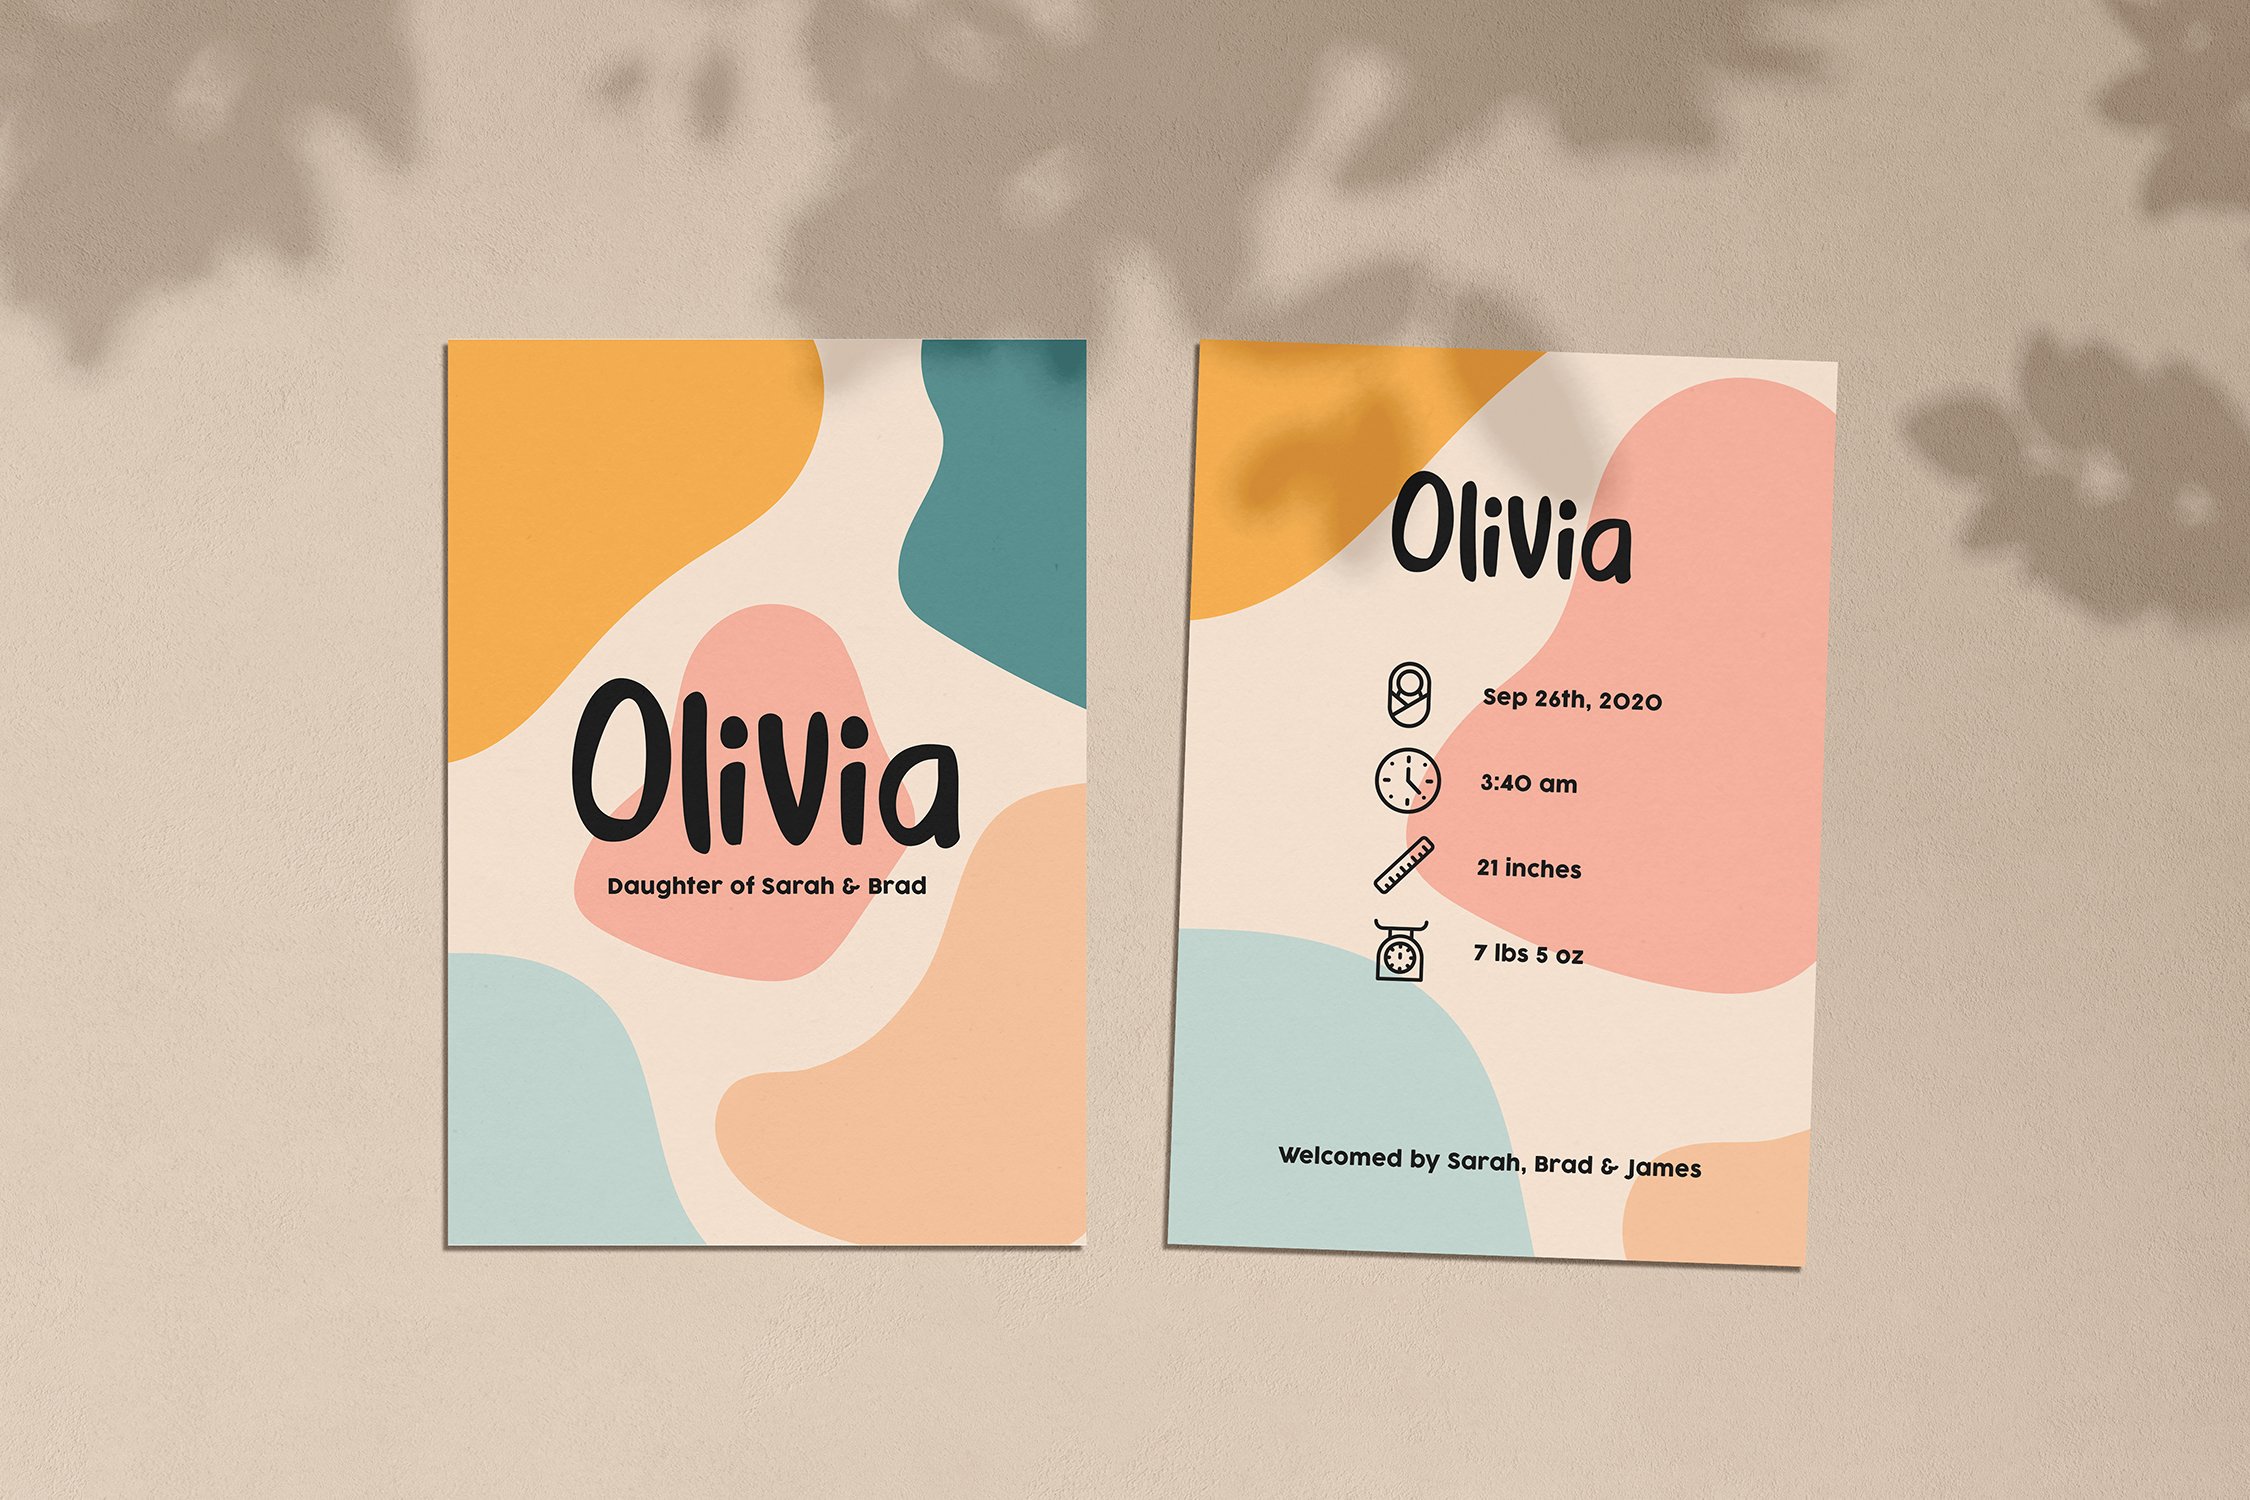 Olivia a newborn announcement card cover image.